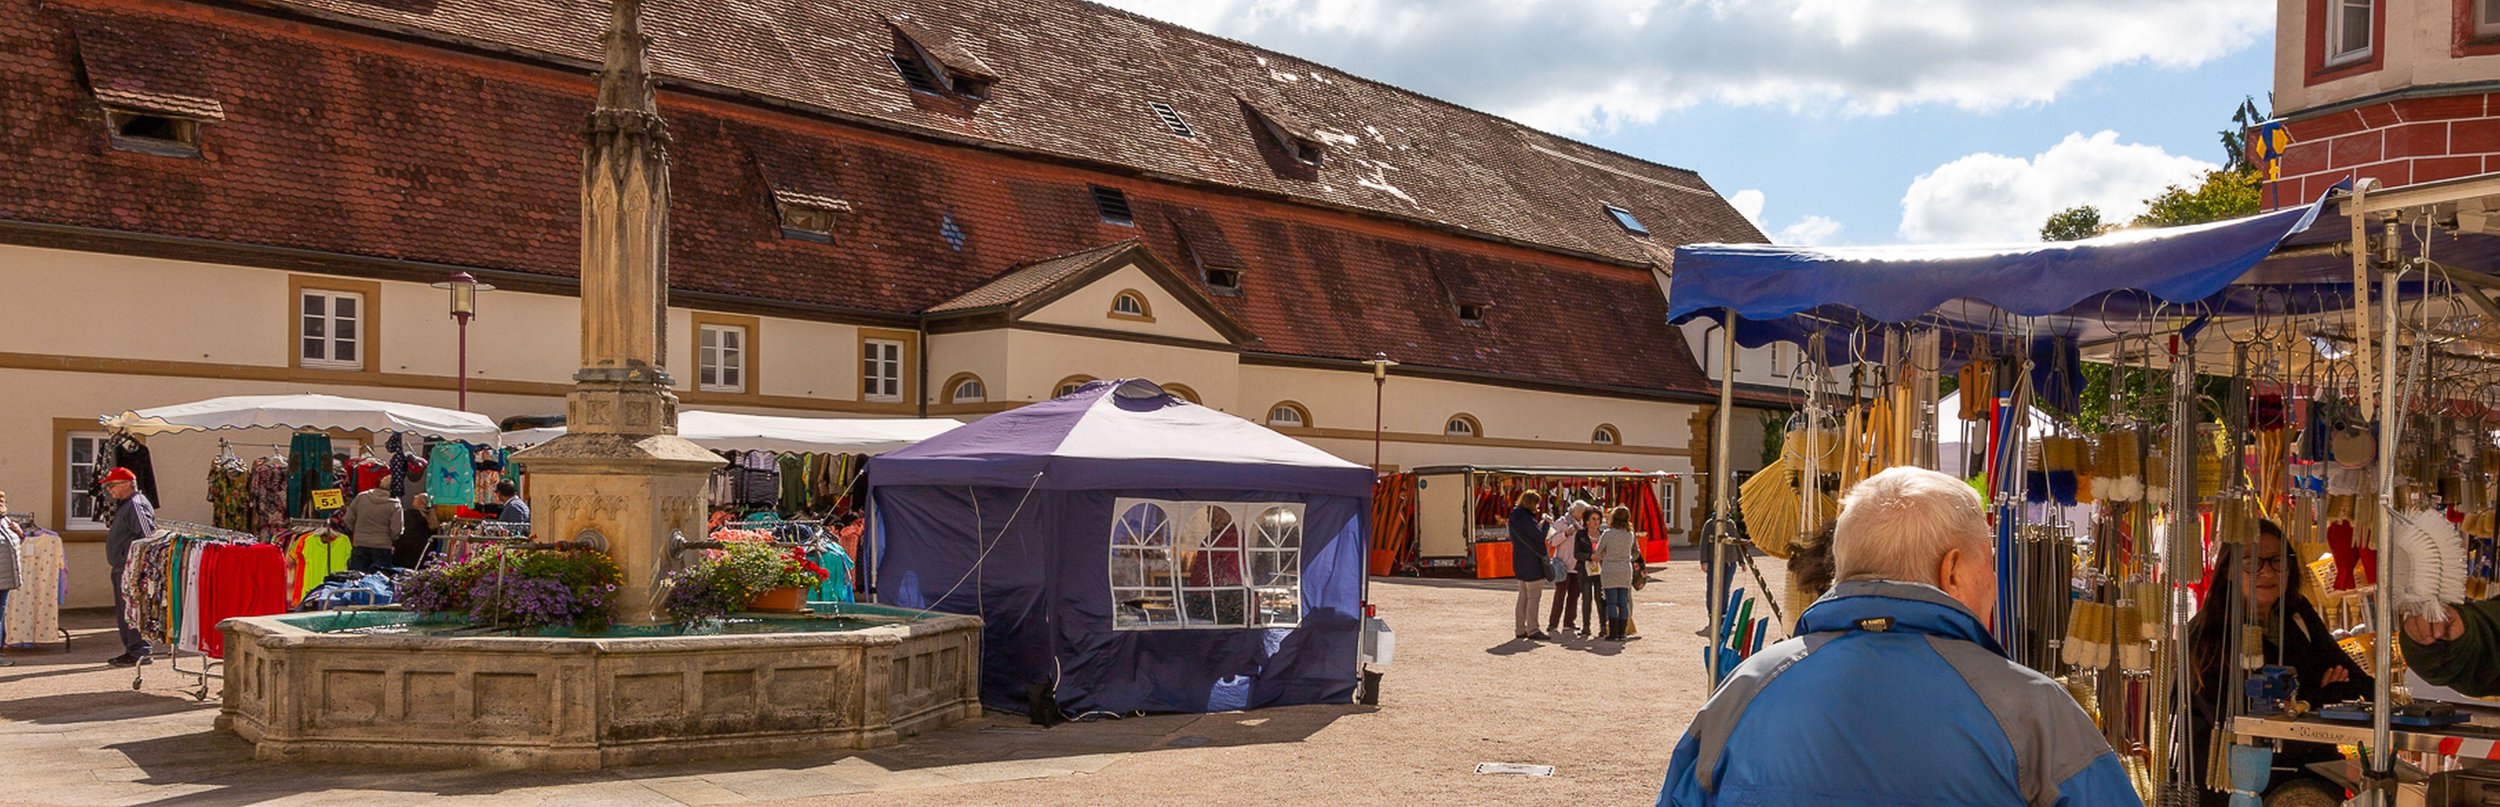 Krämermarkt im Schlosshof